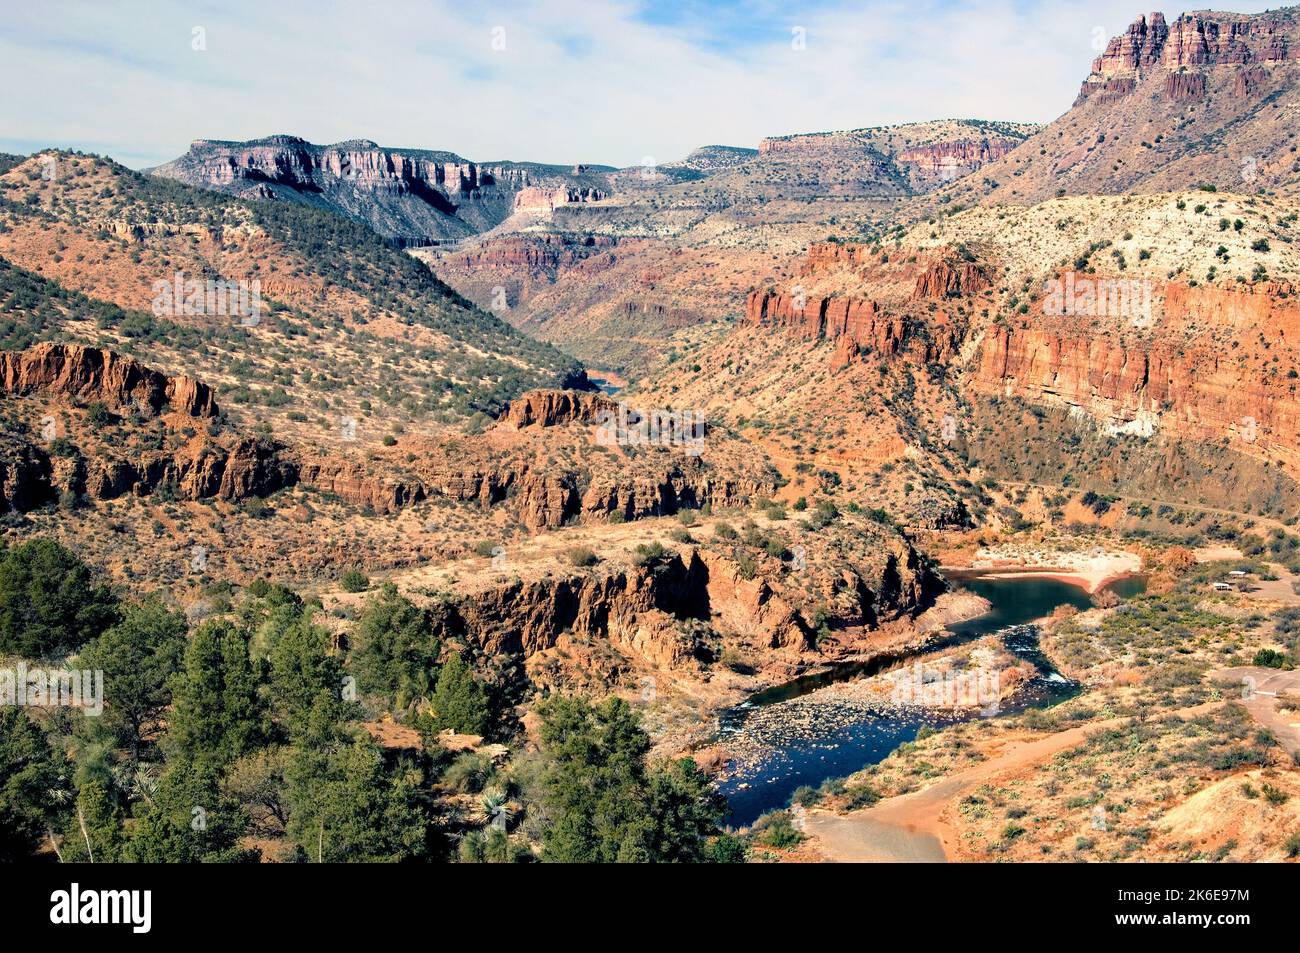 Salt River canyon, Arizona and Apache reservation. Stock Photo